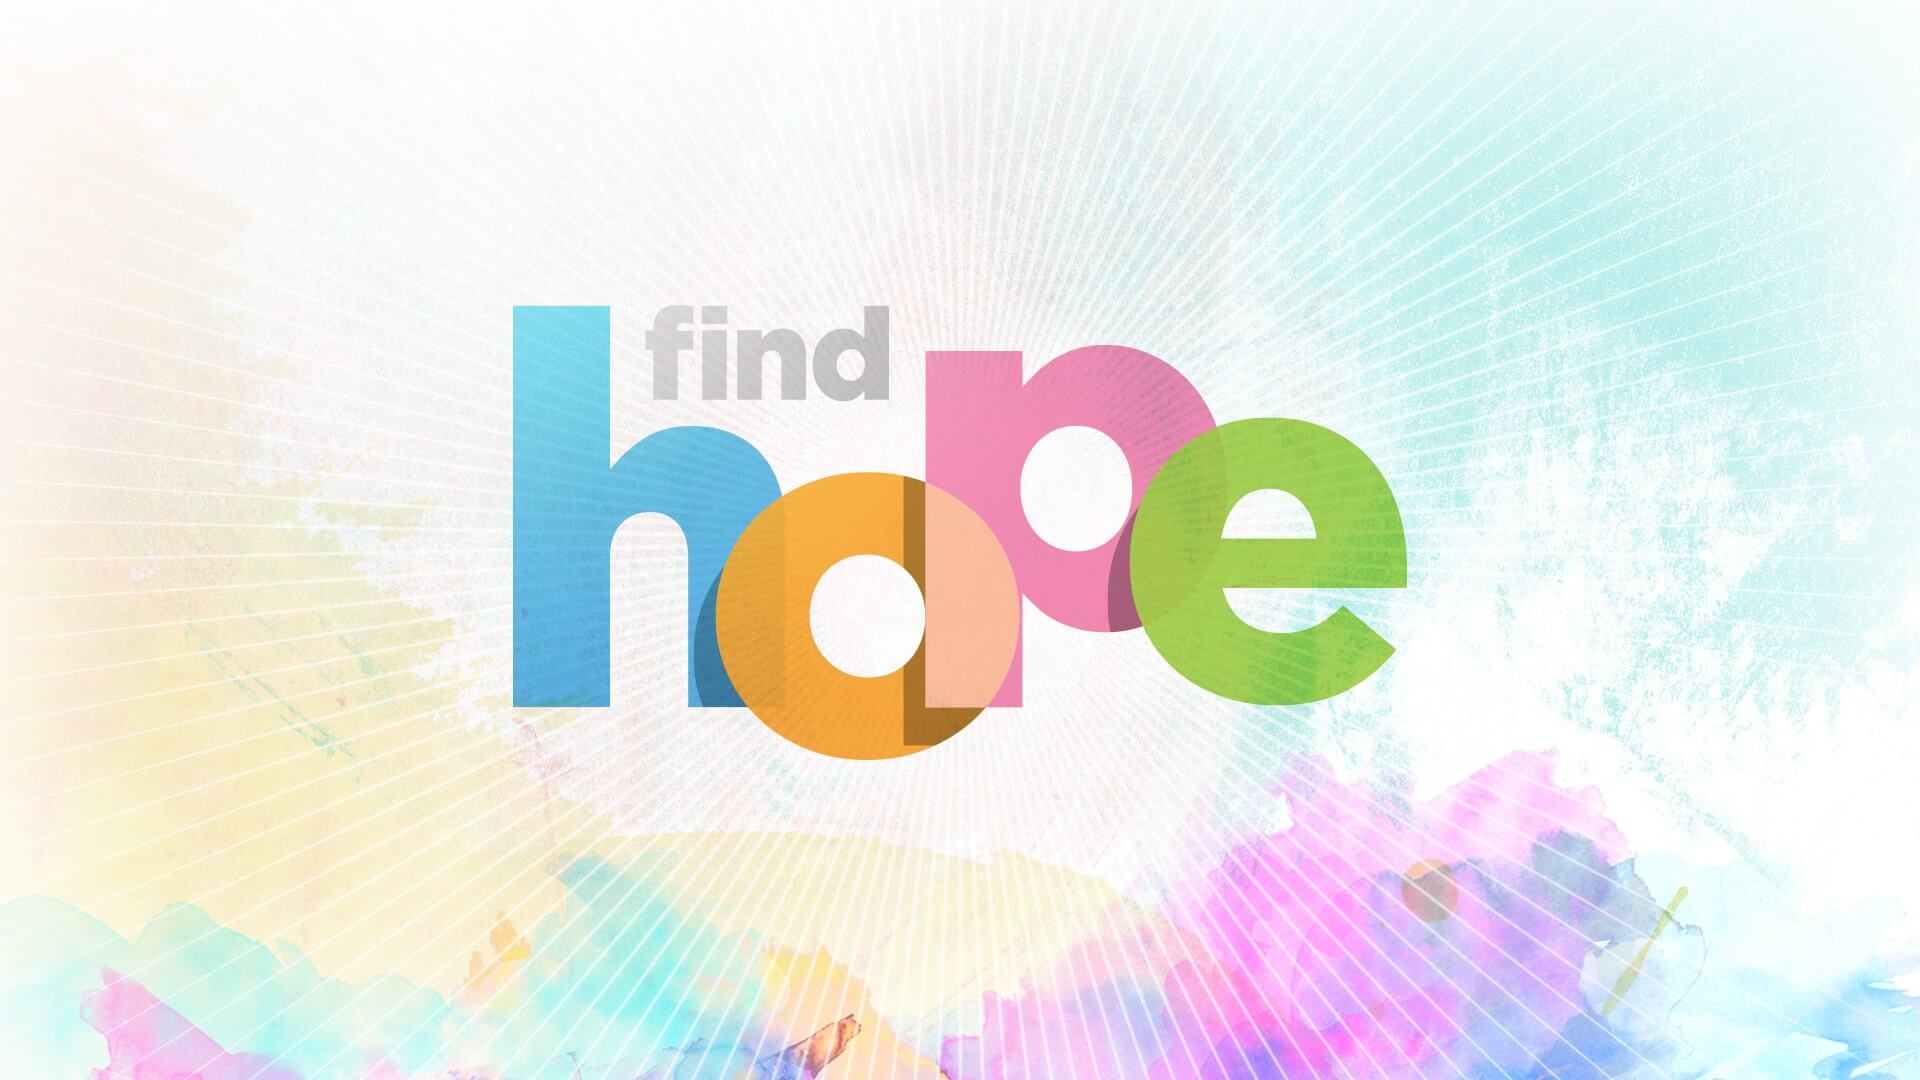 find-hope-1920x1080-1.jpg